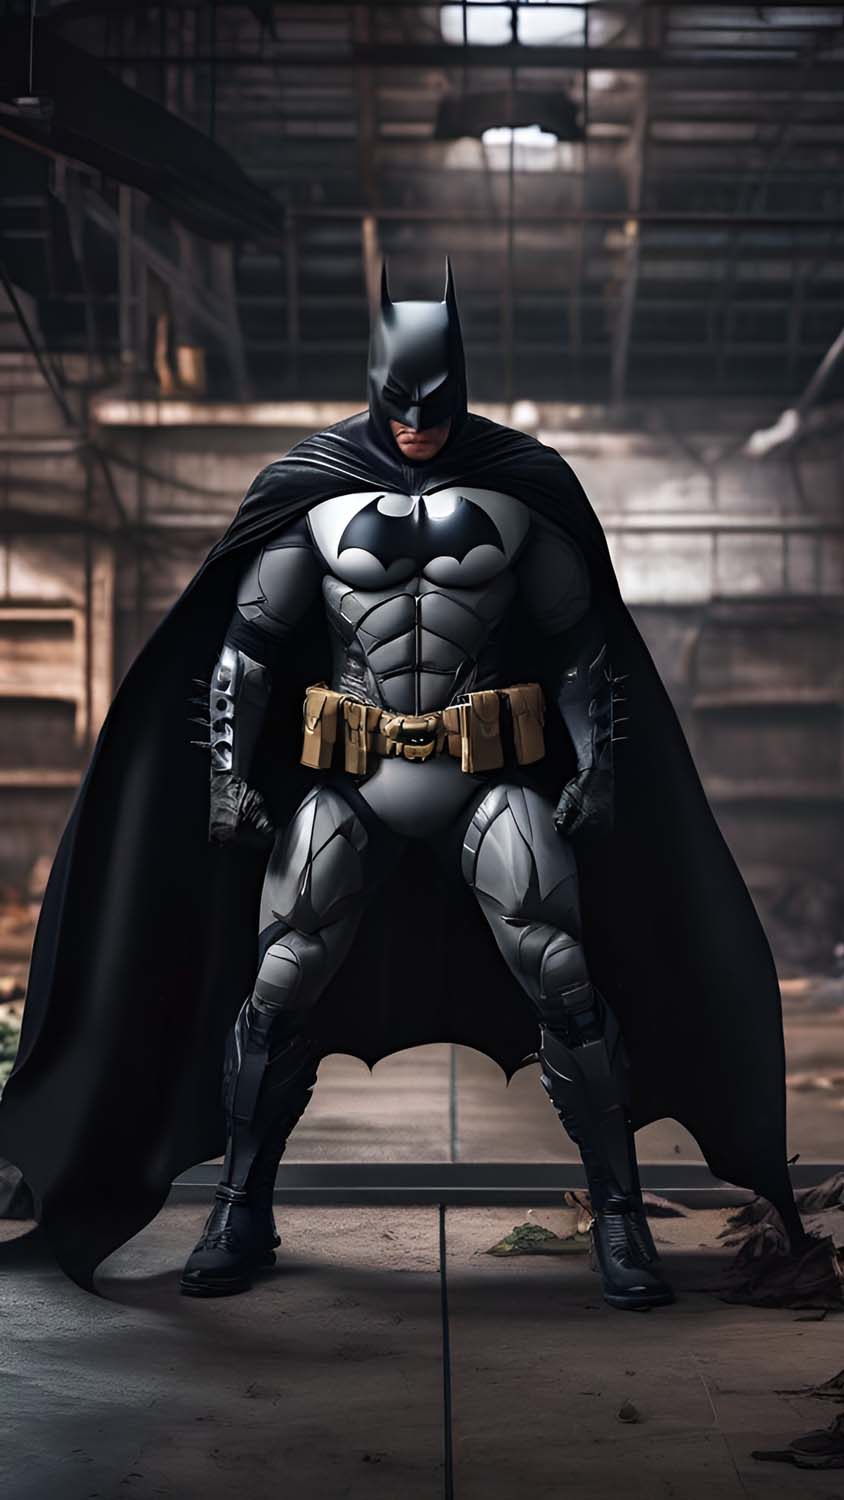 Batman Action iPhone Wallpaper